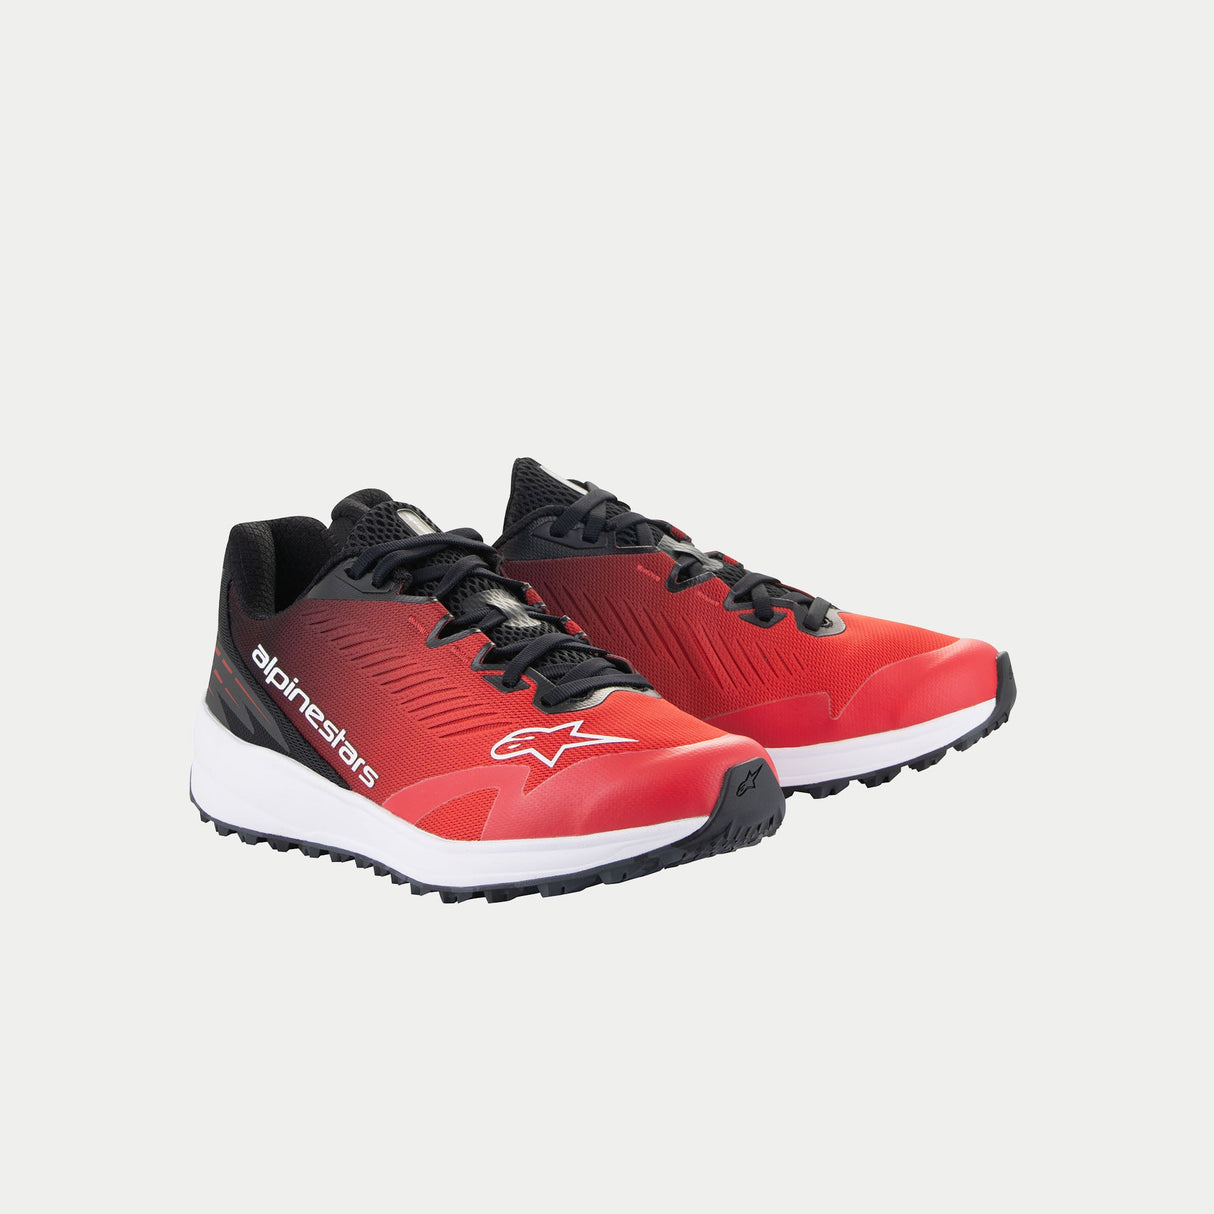 Alpinestars Meta Road V2 Shoes - Red/Black/White